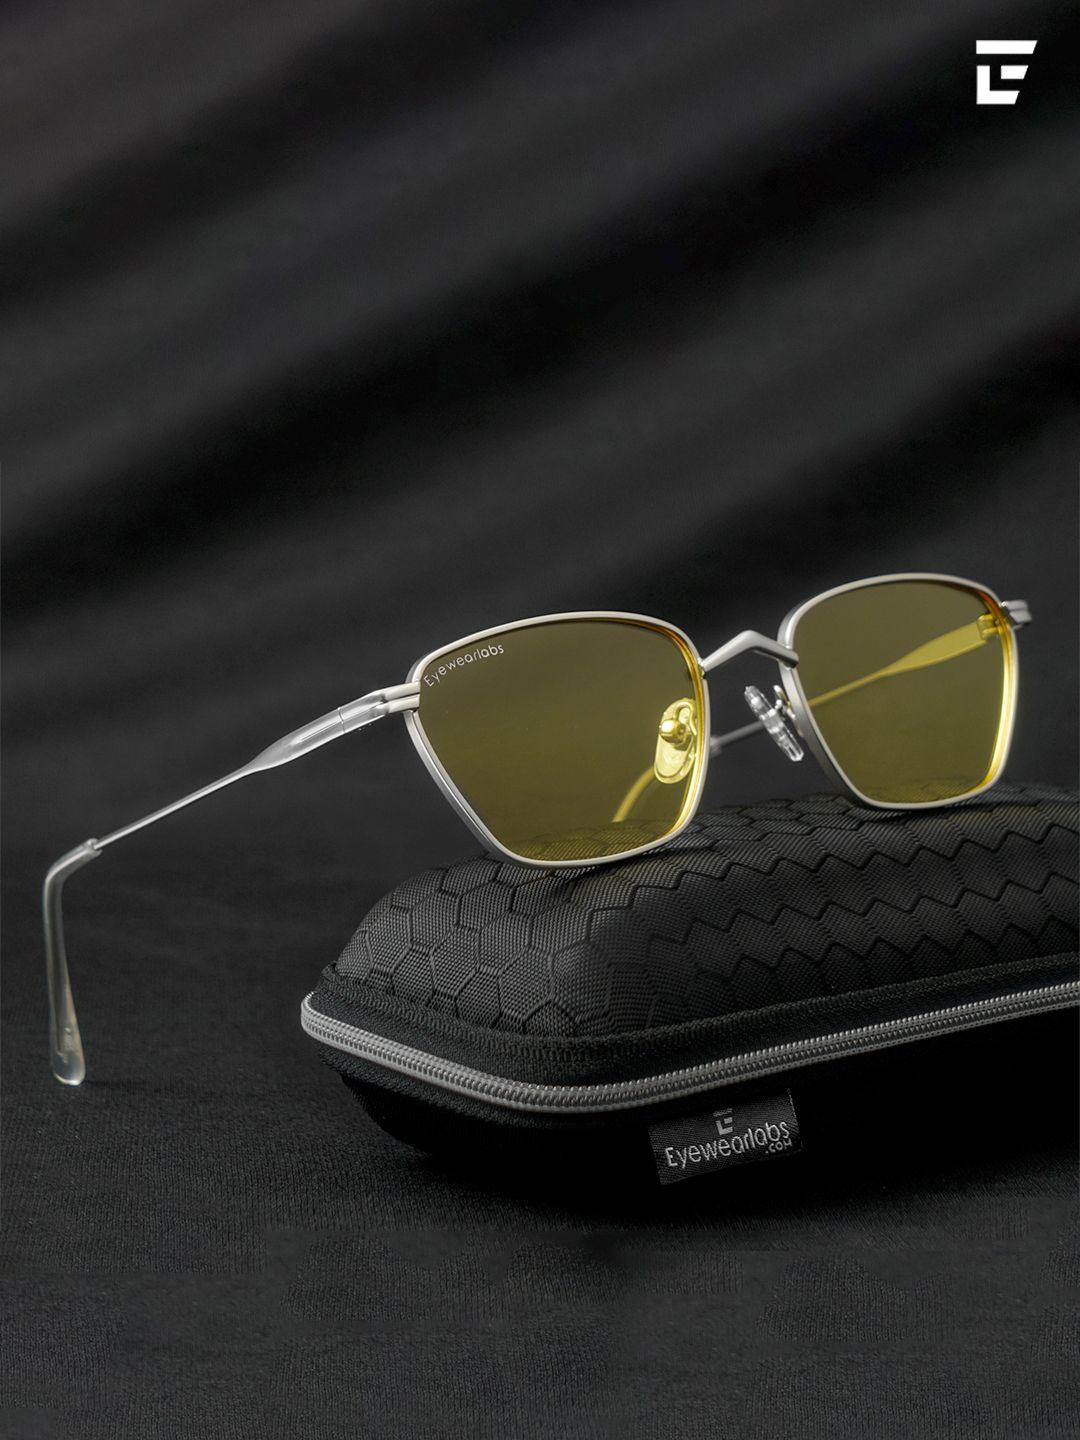 eyewearlabs lens & rectangle sunglasses with polarised lens candrewyellowsc2el1143